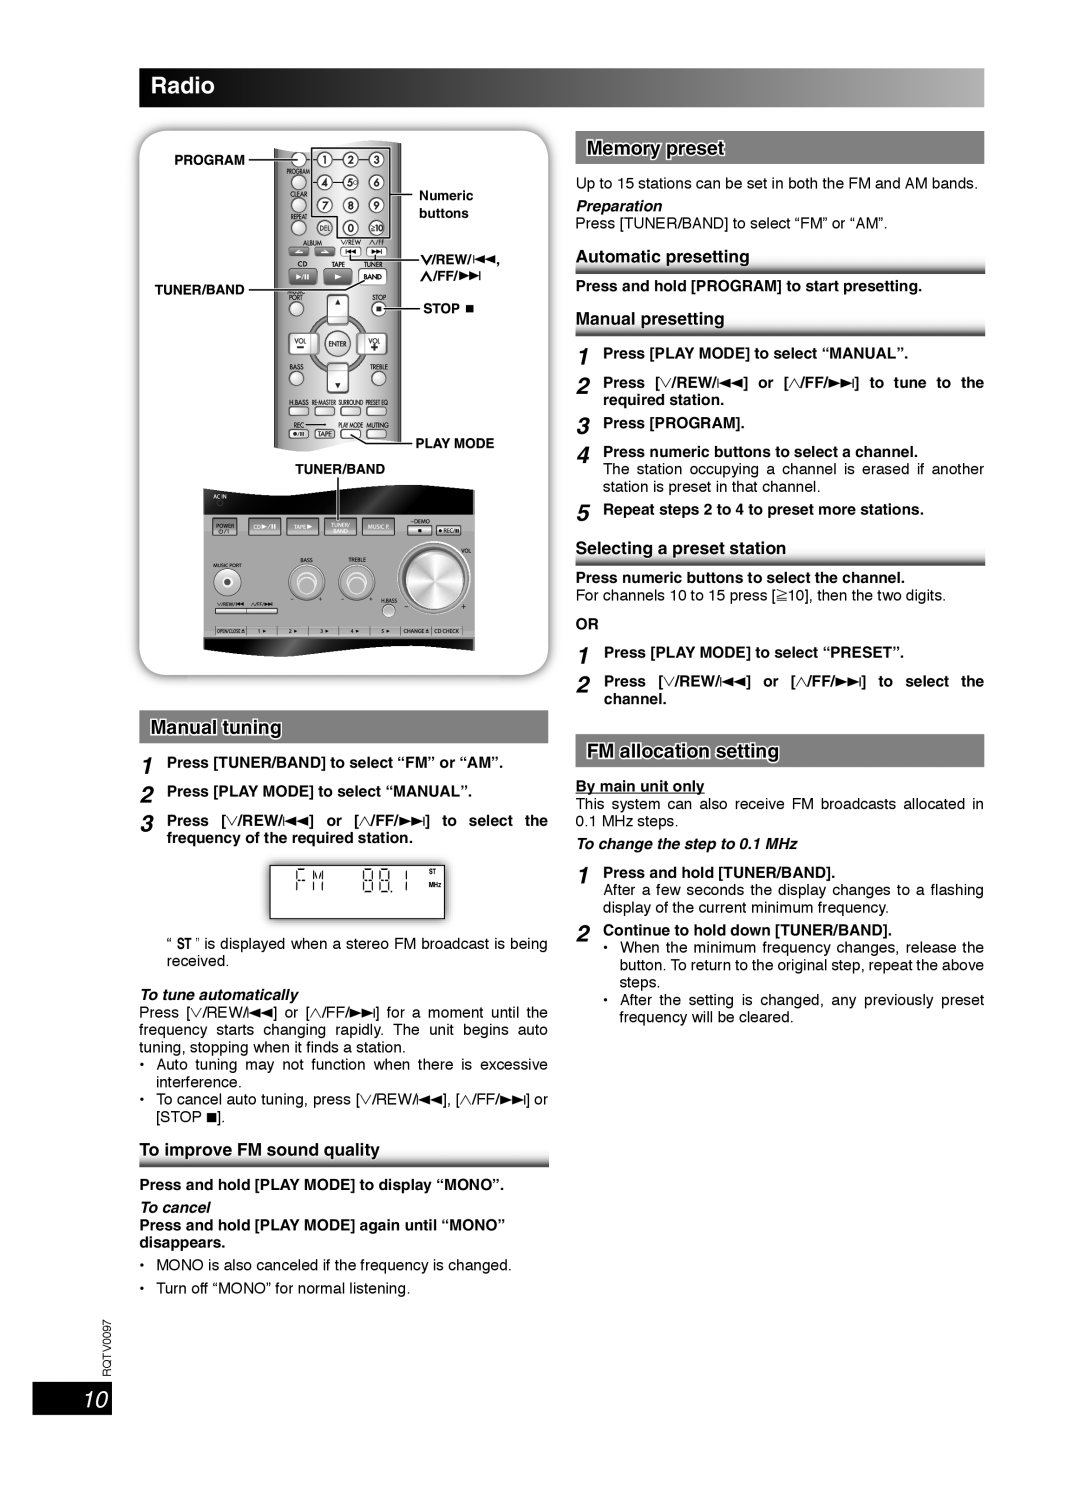 Panasonic SCPM533, RQTV0097-2P, SC-PM53 Radio, Manual tuning, Memory preset, FM allocation setting 